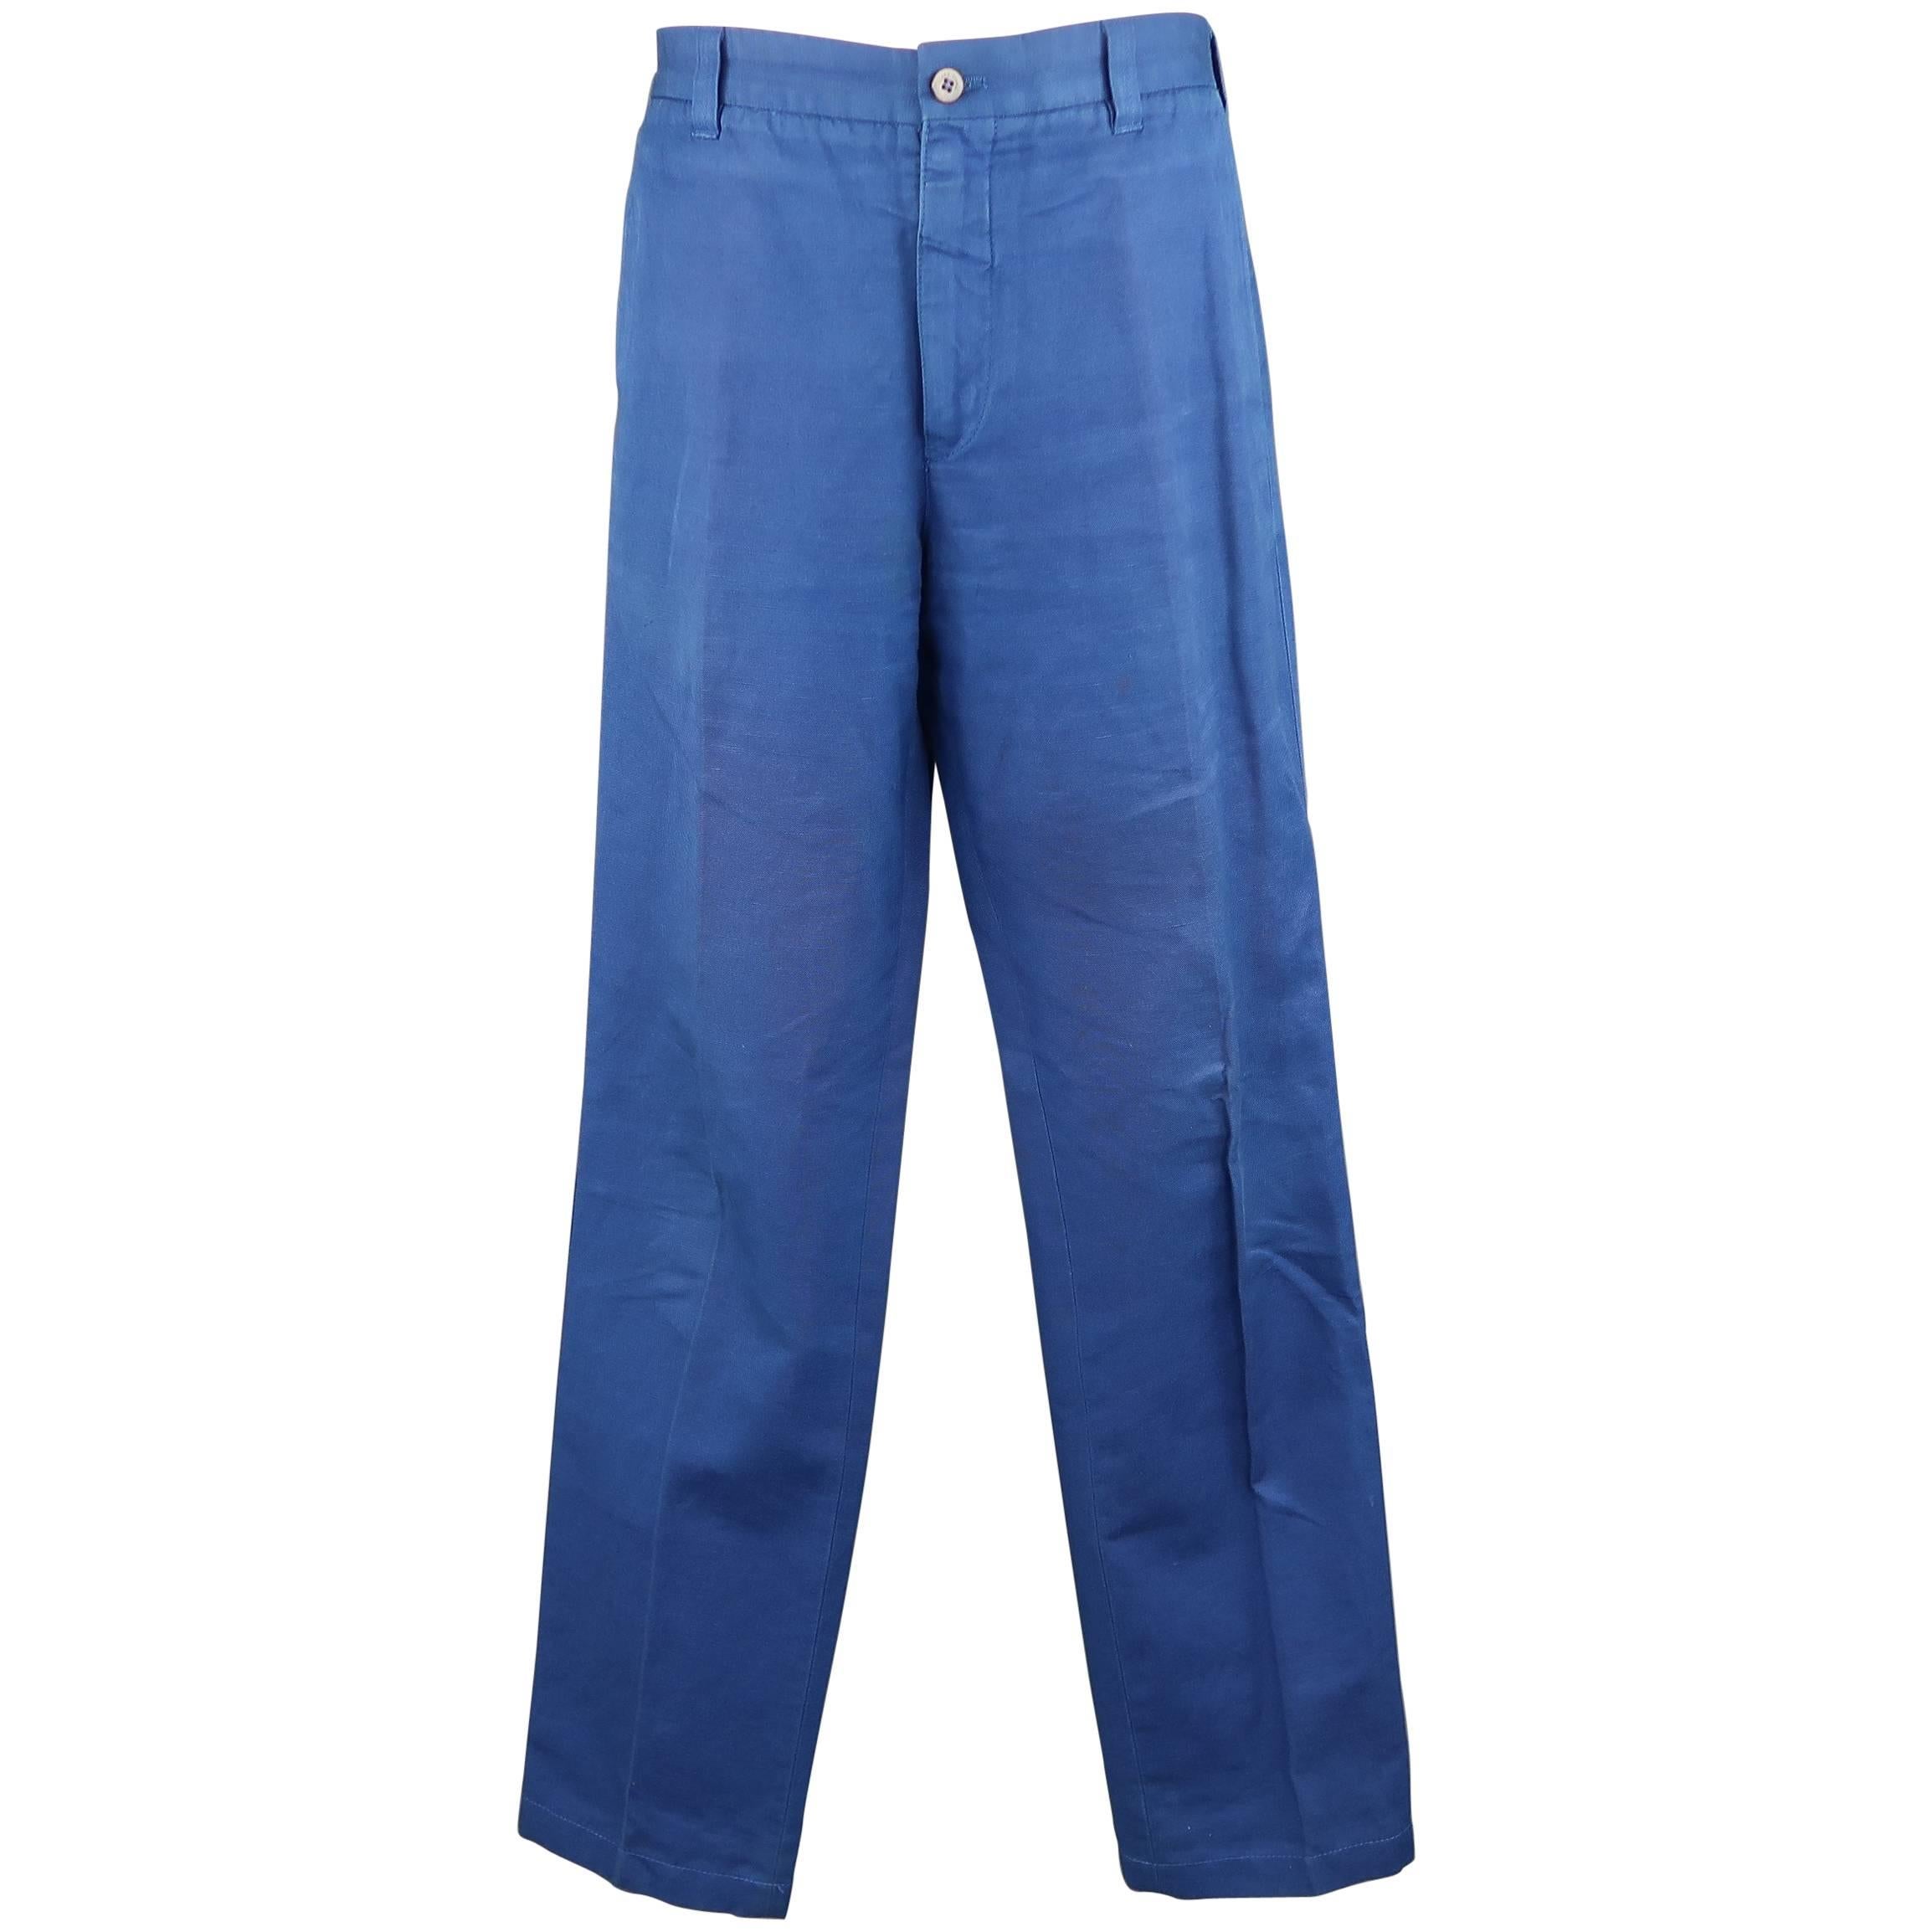 Men's LORO PIANA Size 34 Royal Blue Cotton Chino Pants